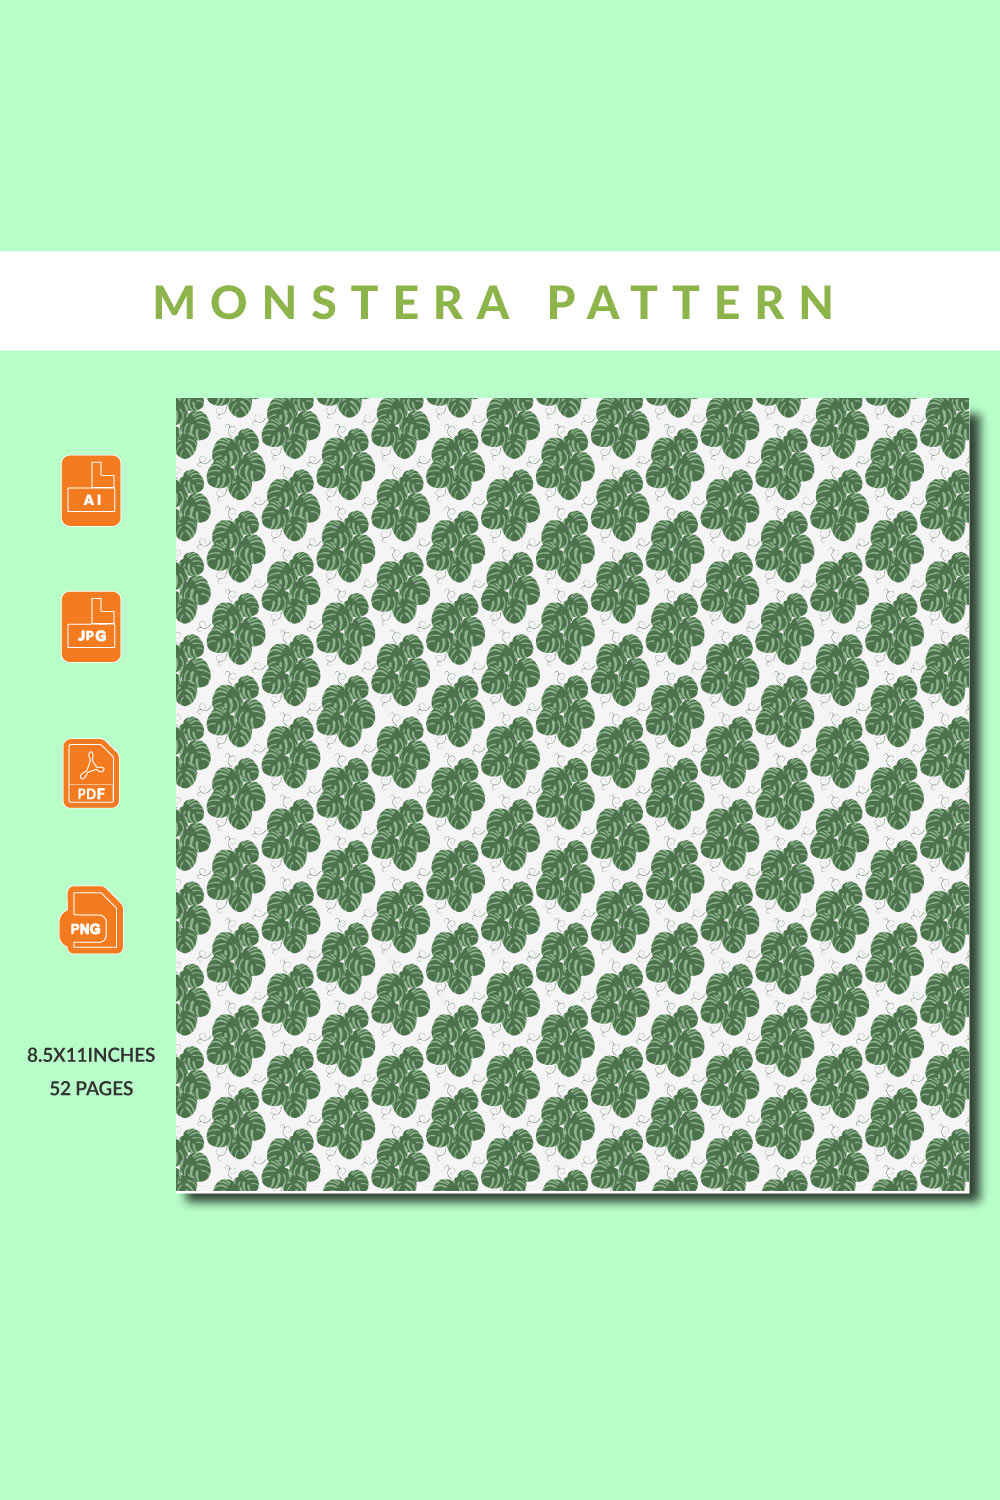 Simple Monstera Pattern Design pinterest image.